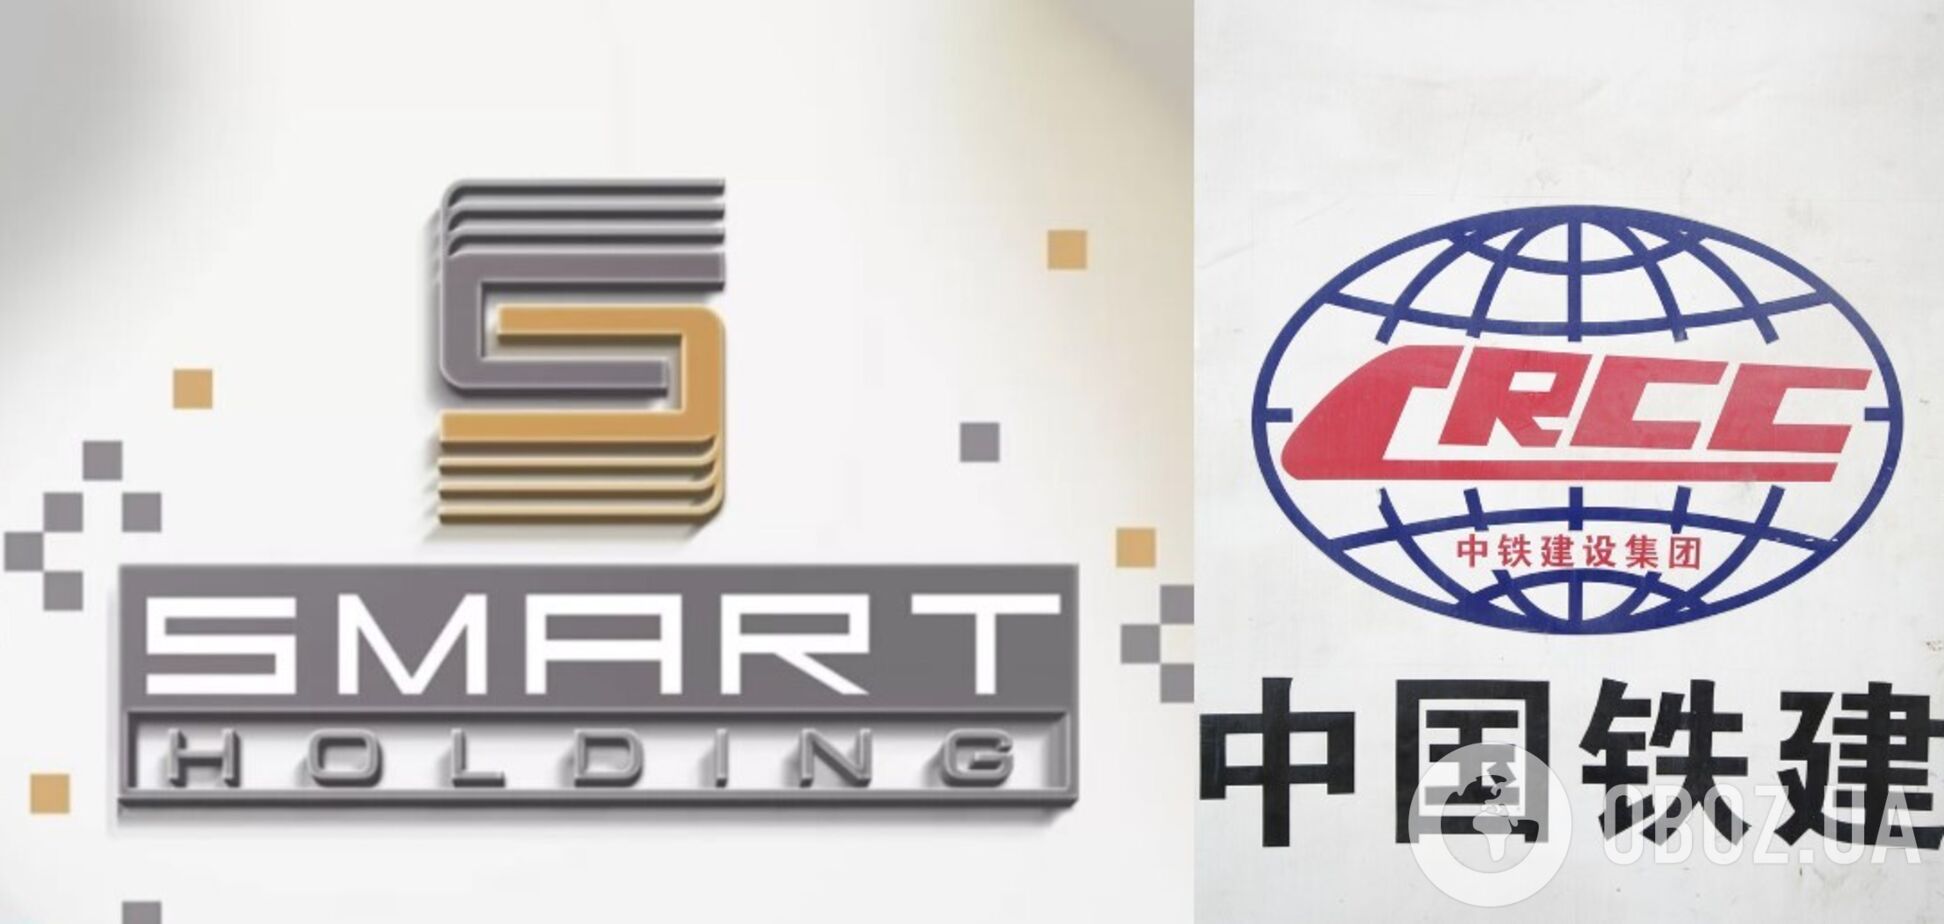  SmartHolding и China Railway Construction CorporationLtd планируют сотрудничество на базе портовых активов